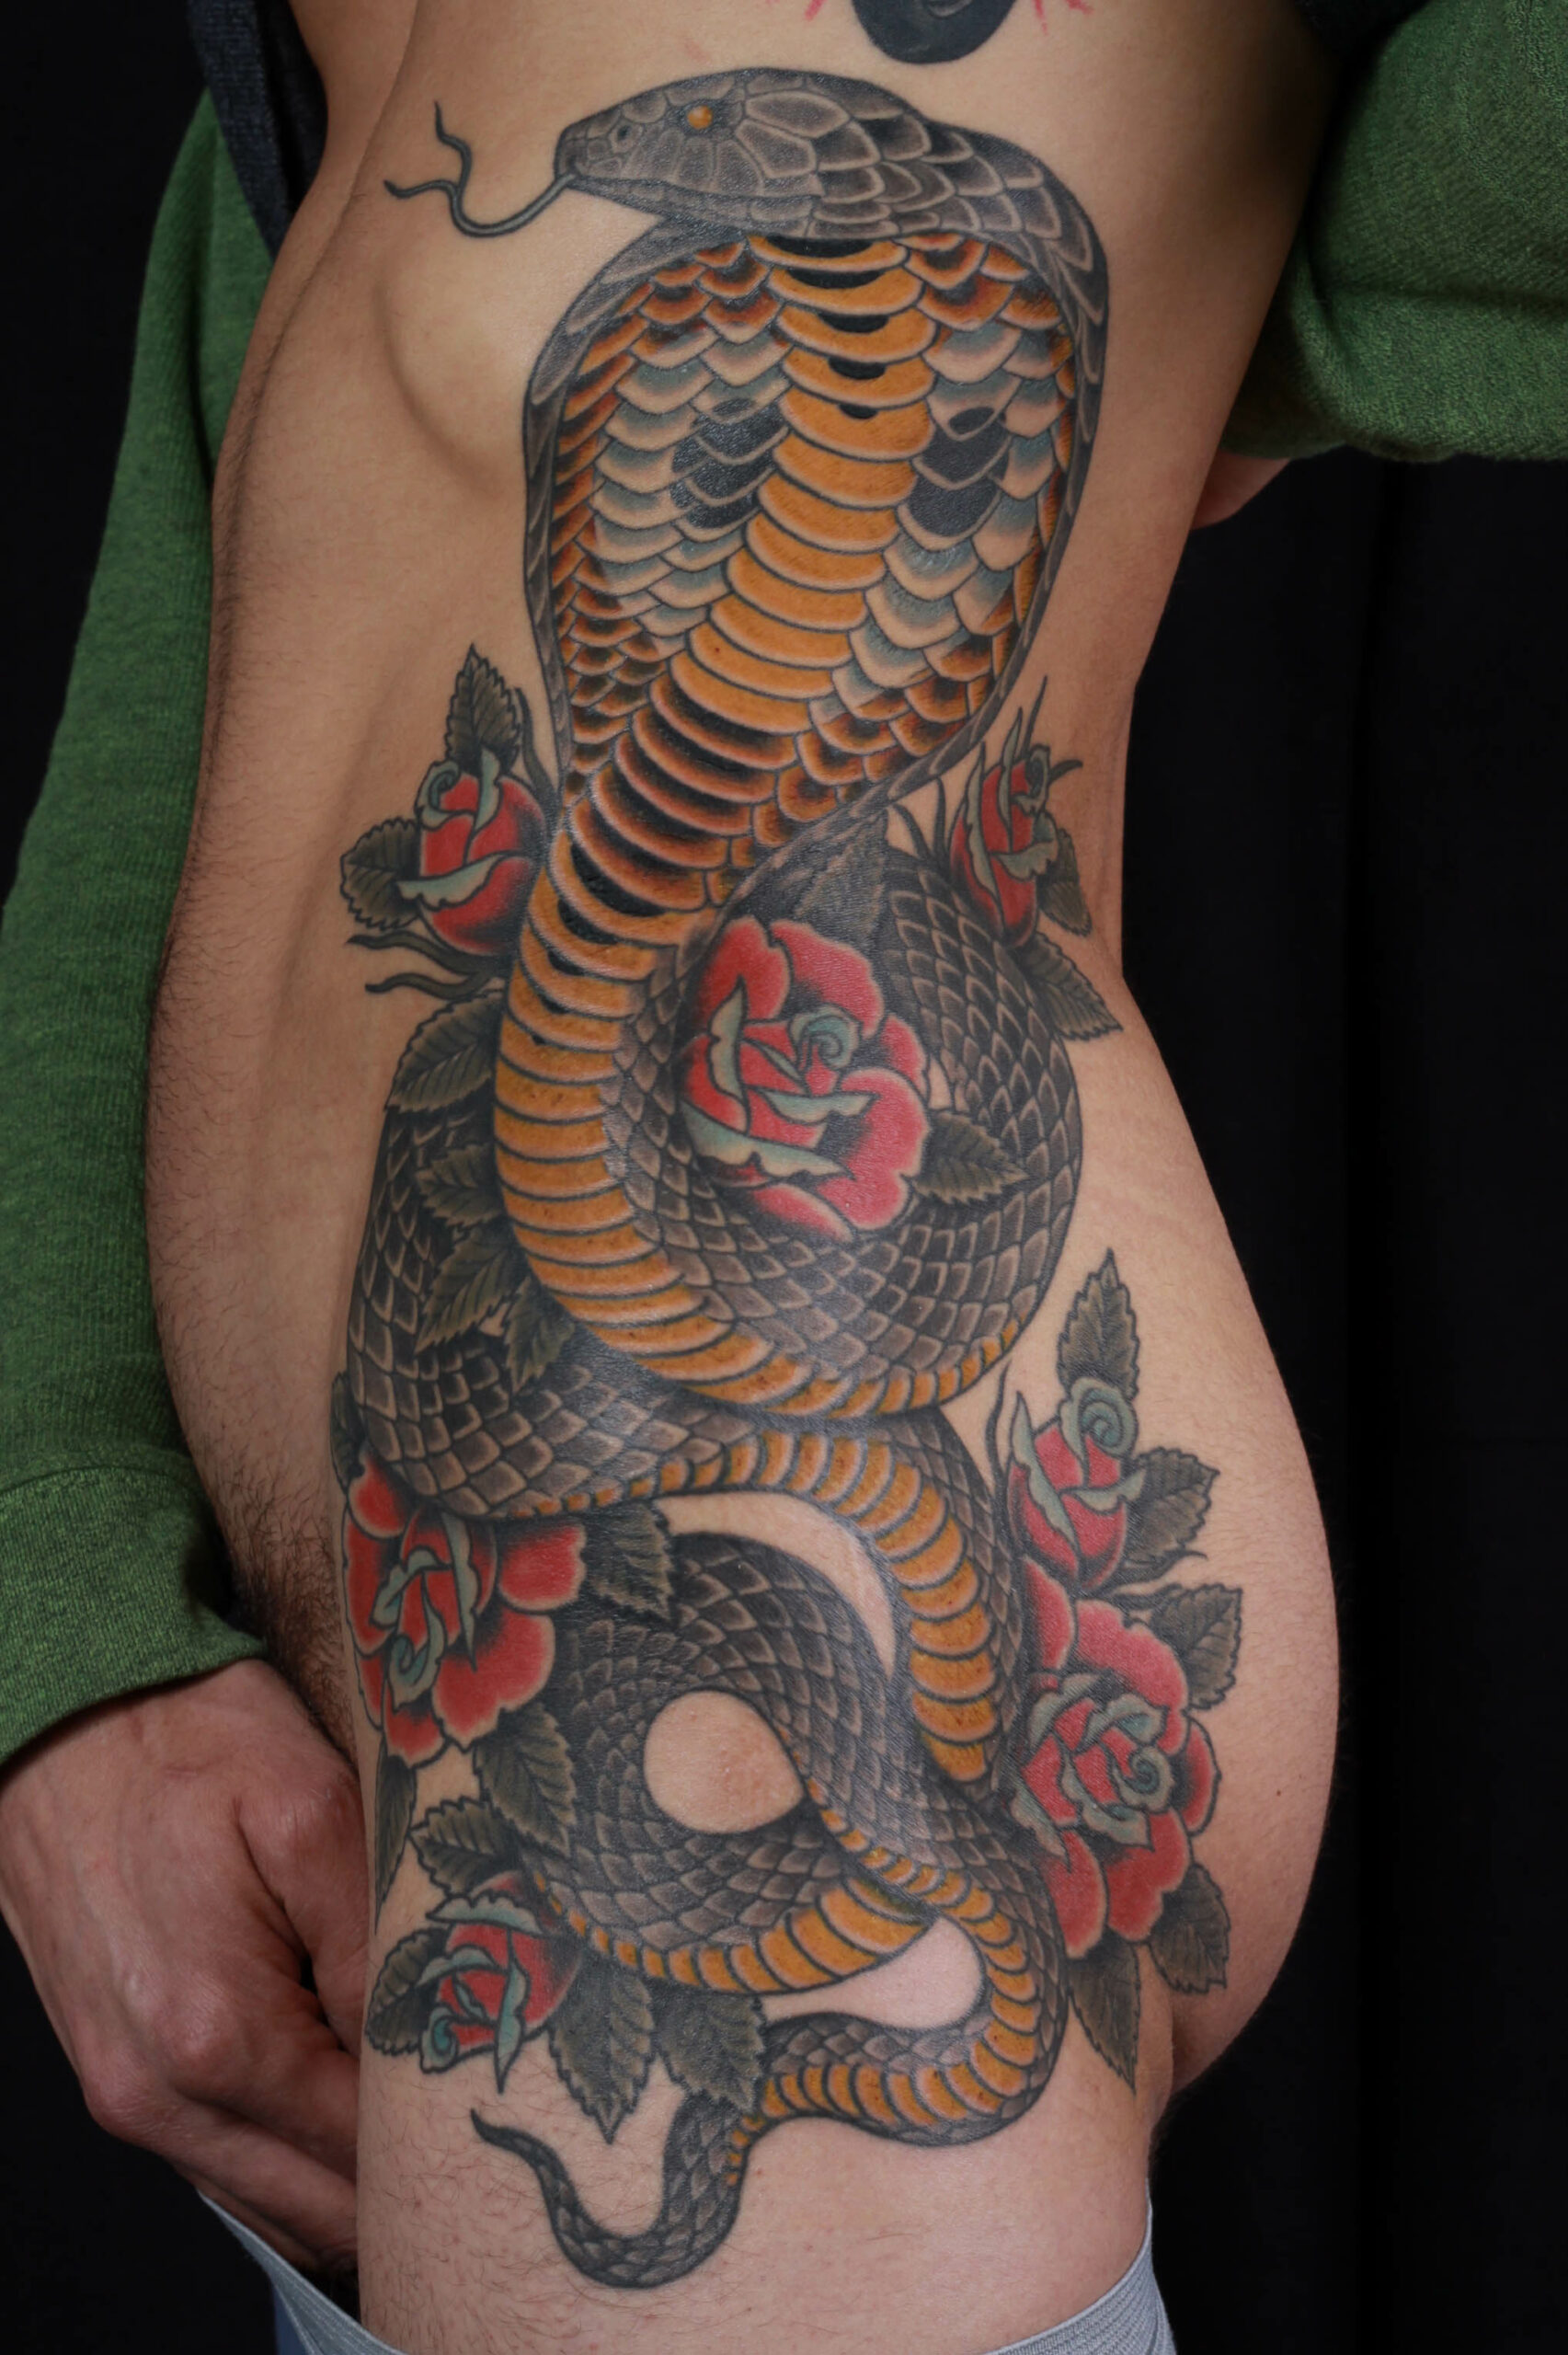 brian-thurow-dedication-tattoo-ribs-hip-cobra-snake-roses